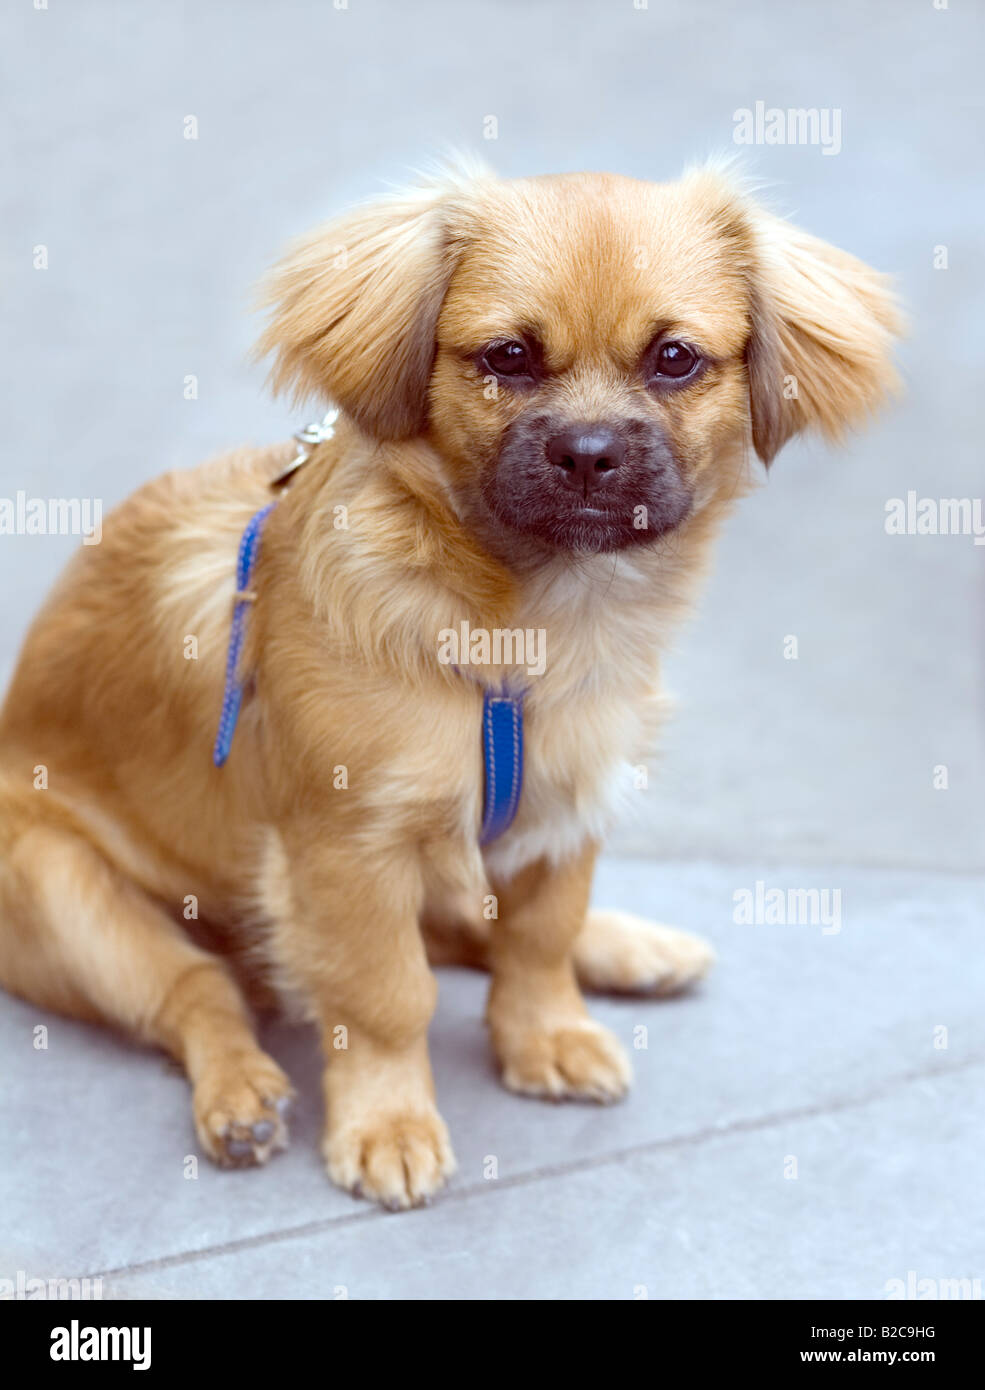 Cute Pet Dog Stock Photo